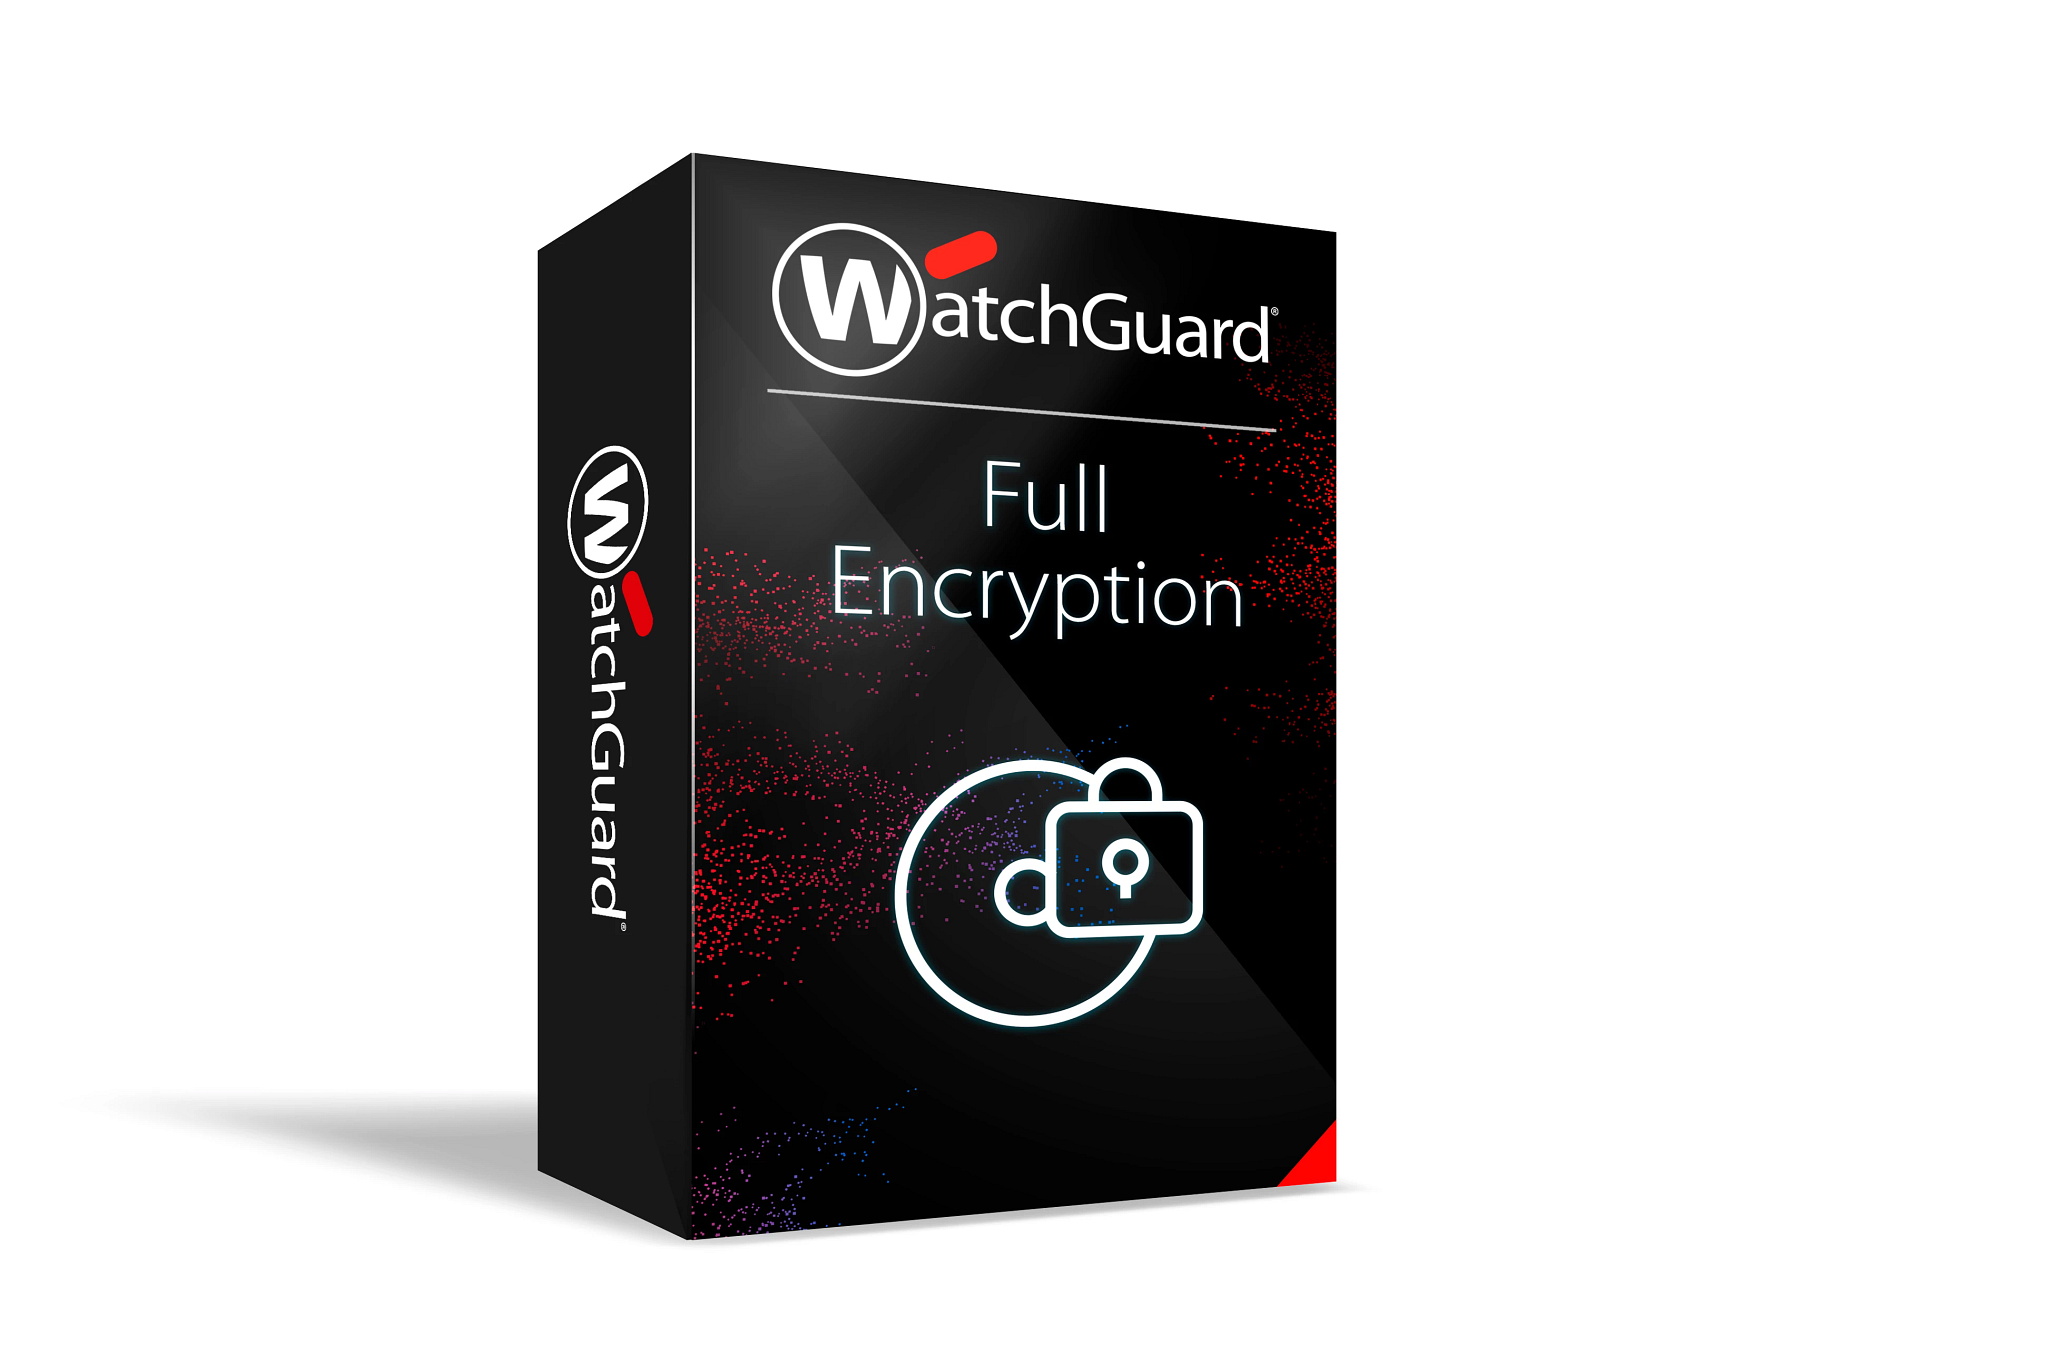 WatchGuard Full Encryption